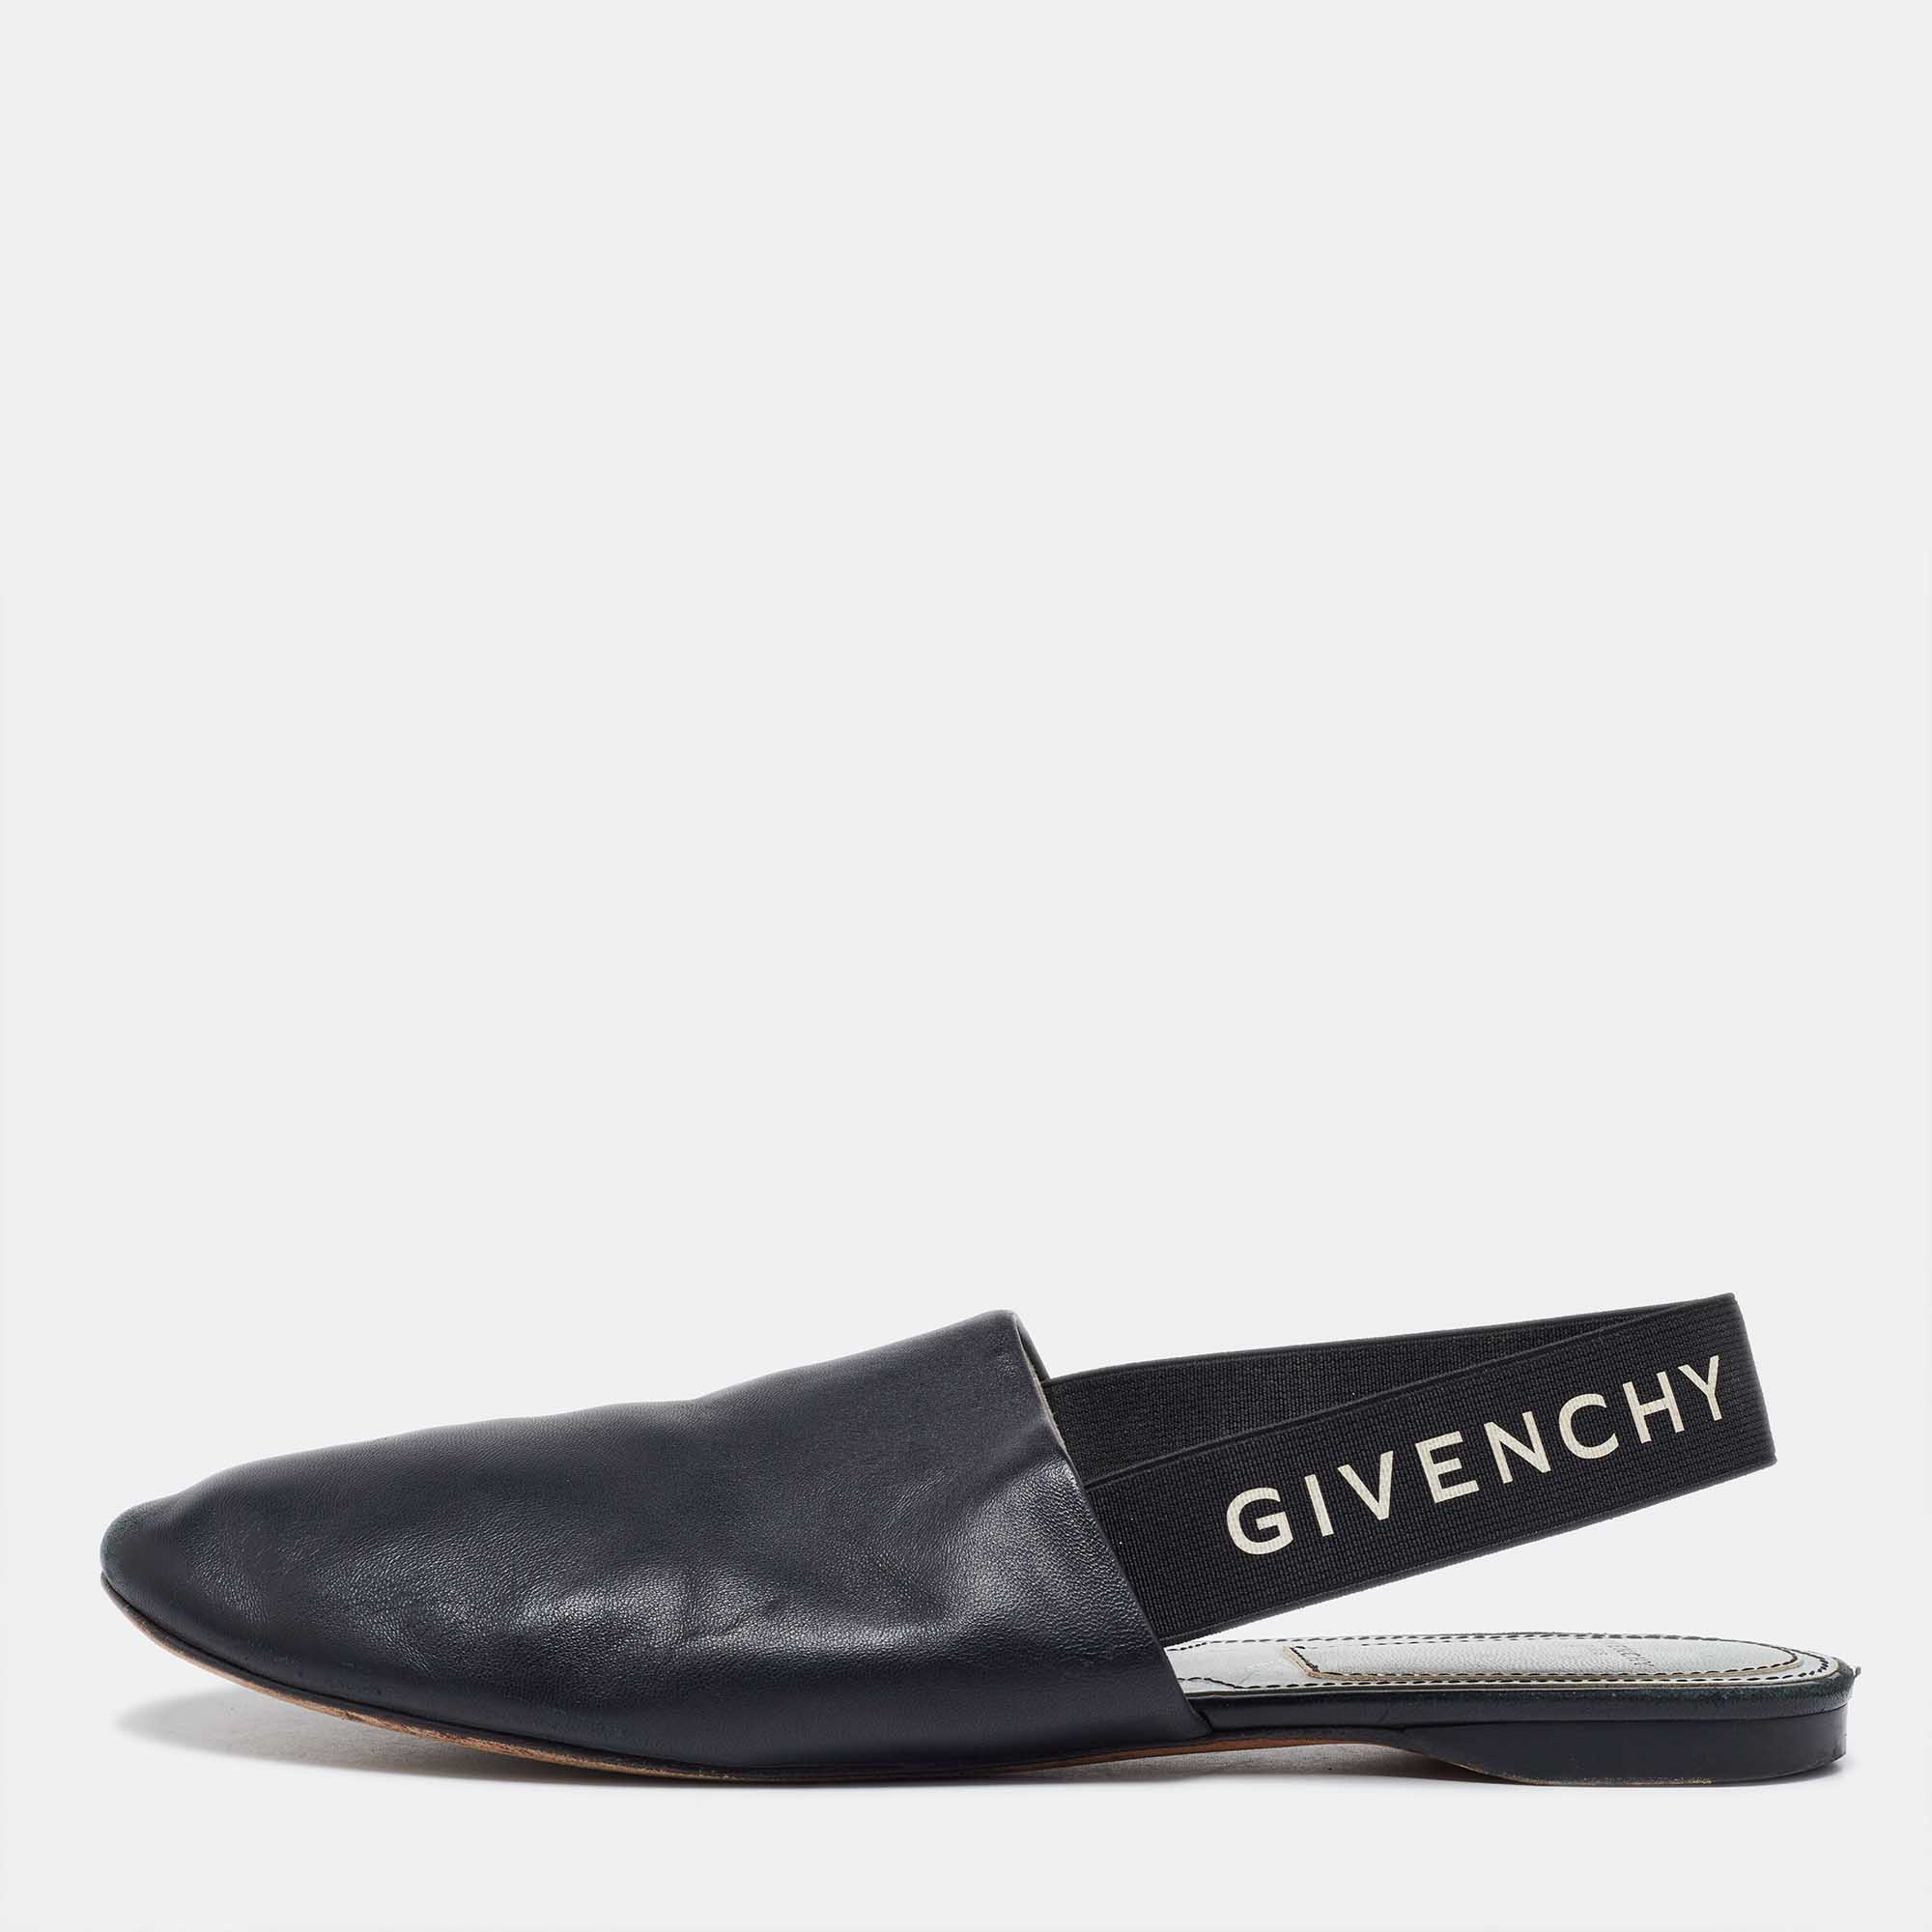 Givenchy black leather rivington slingback flats size 38